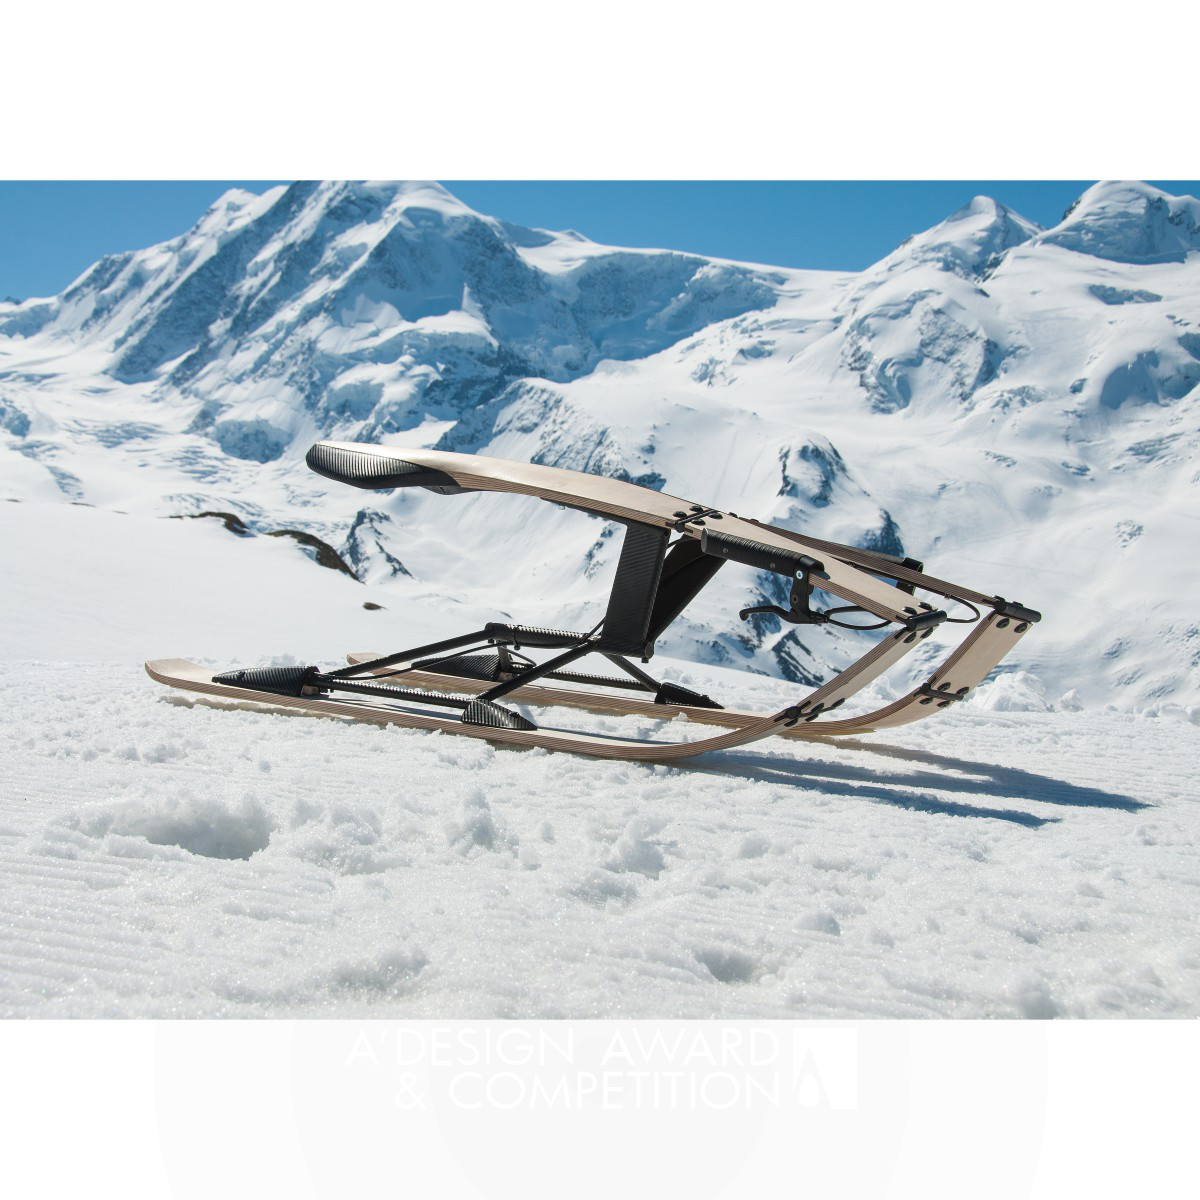 Aroc racing sledge by Fabian Kessler